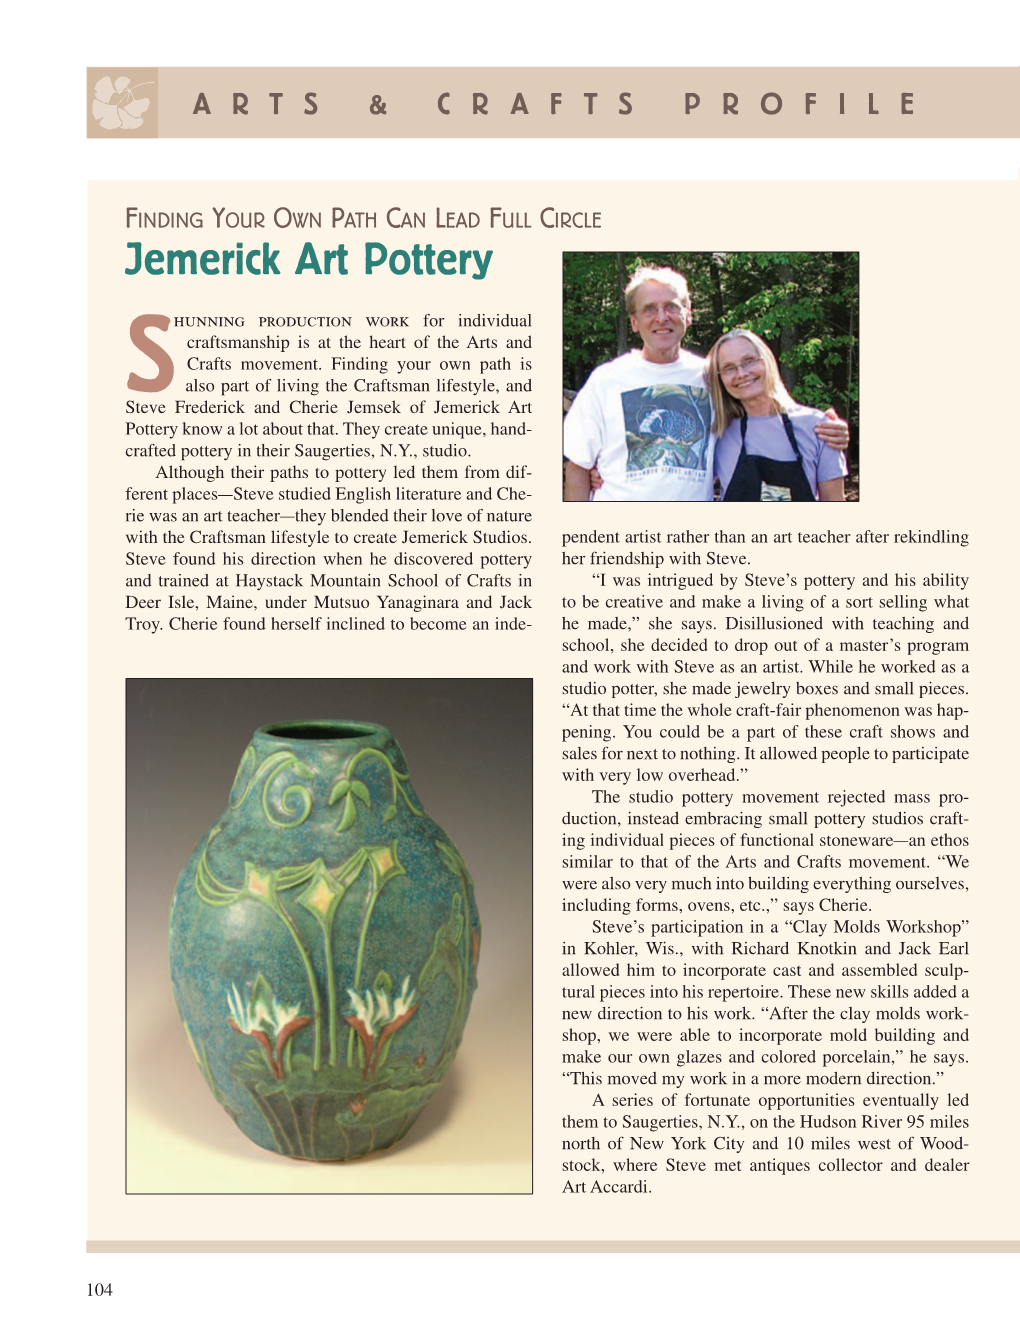 Jemerick Art Pottery